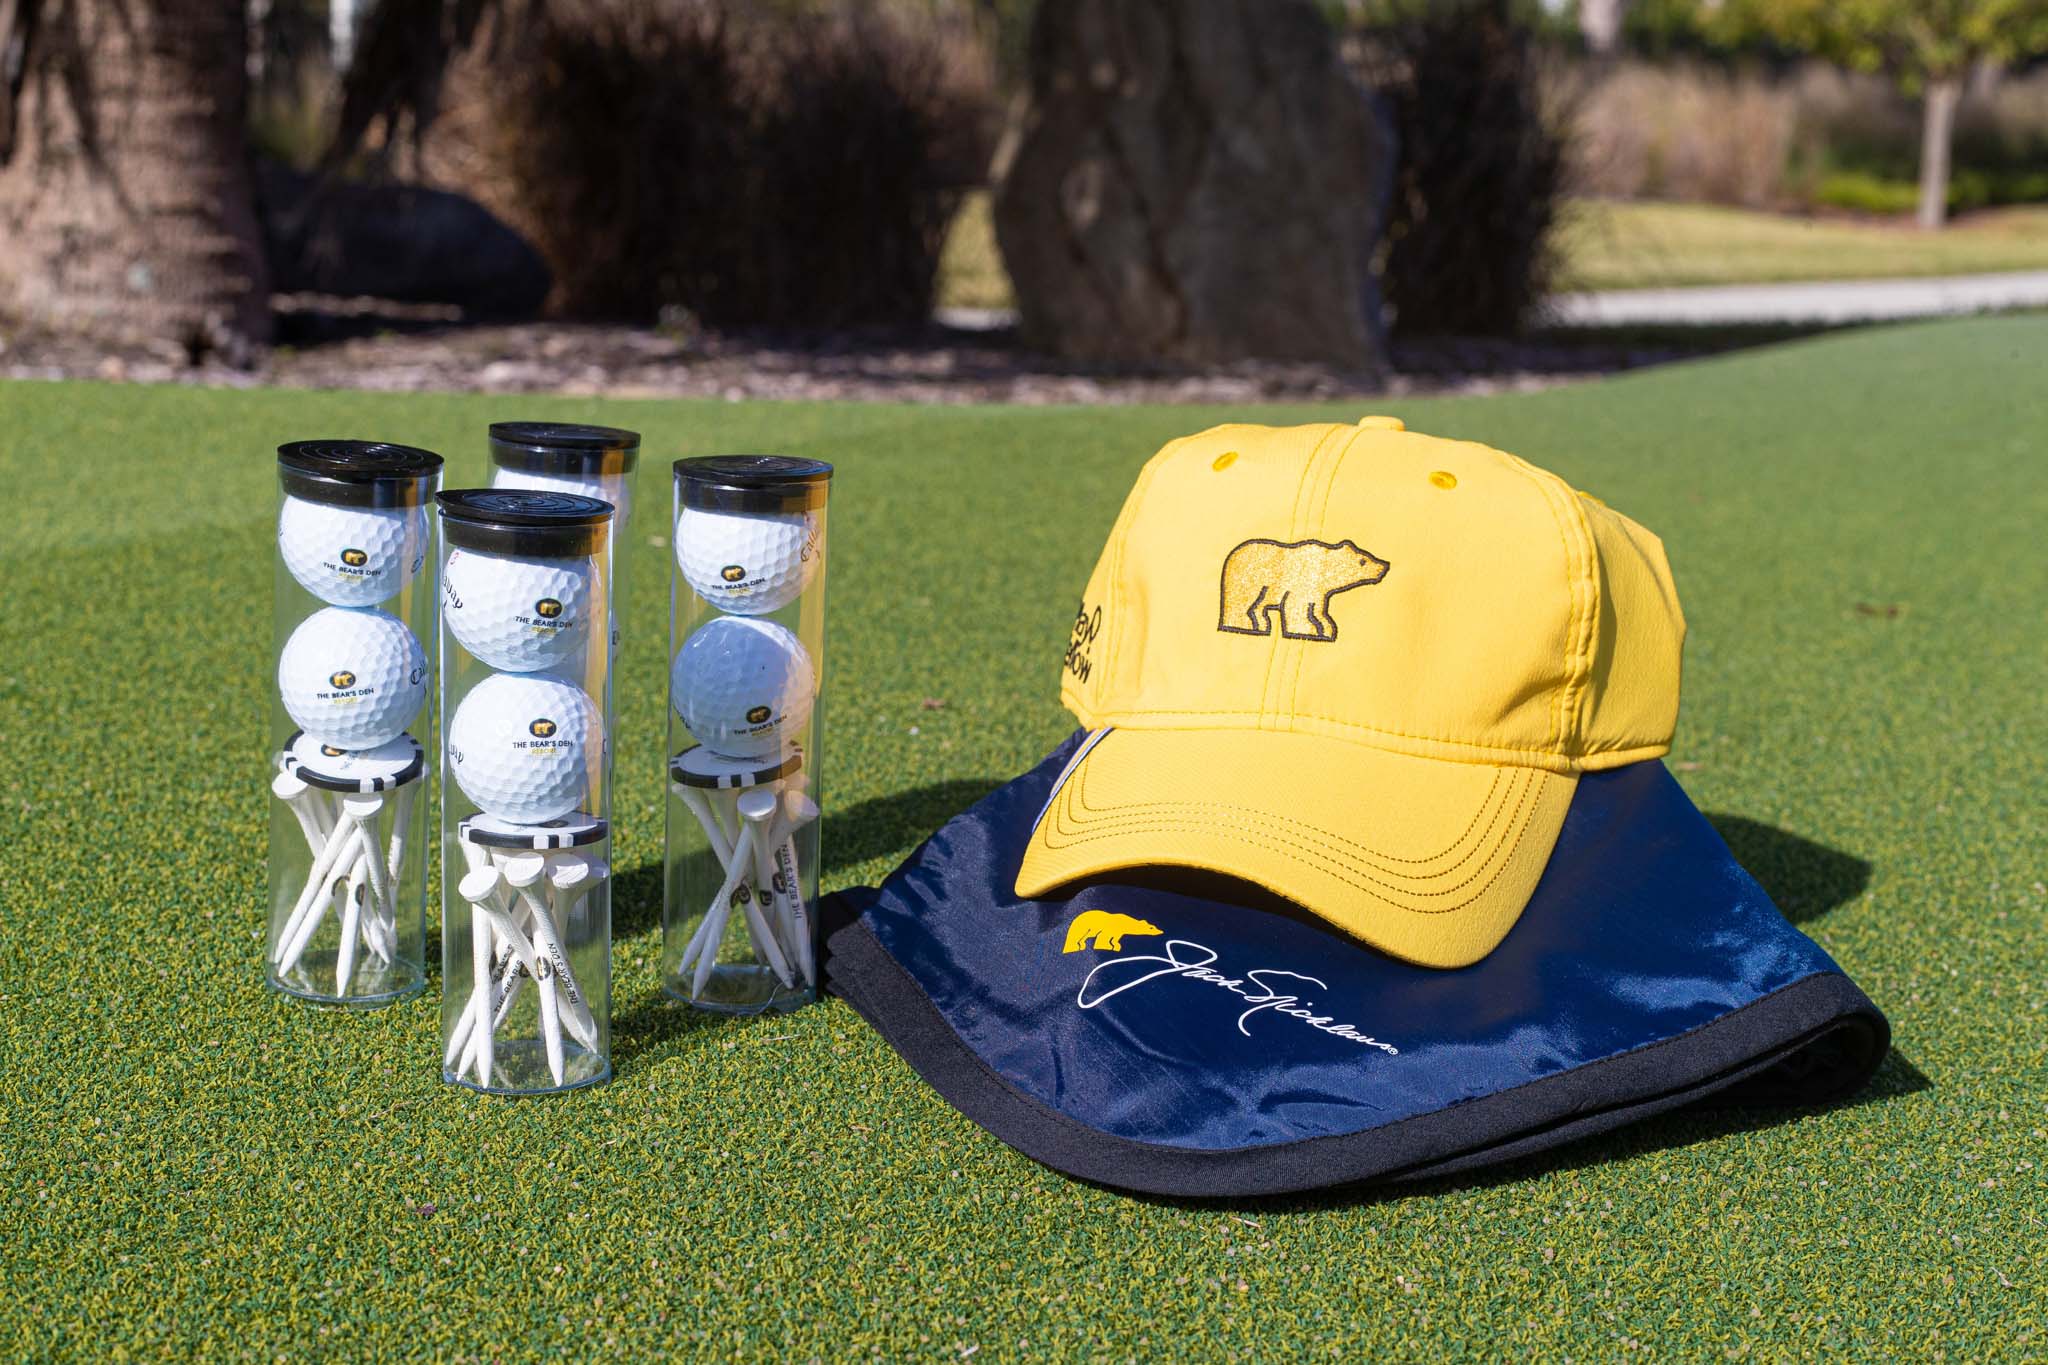 Golf Gift Package Items: A Bear’s Den Hat, Golf Balls Ans Tees, And A Jack Nicklaus Bag At Bear's Den Resort Orlando.